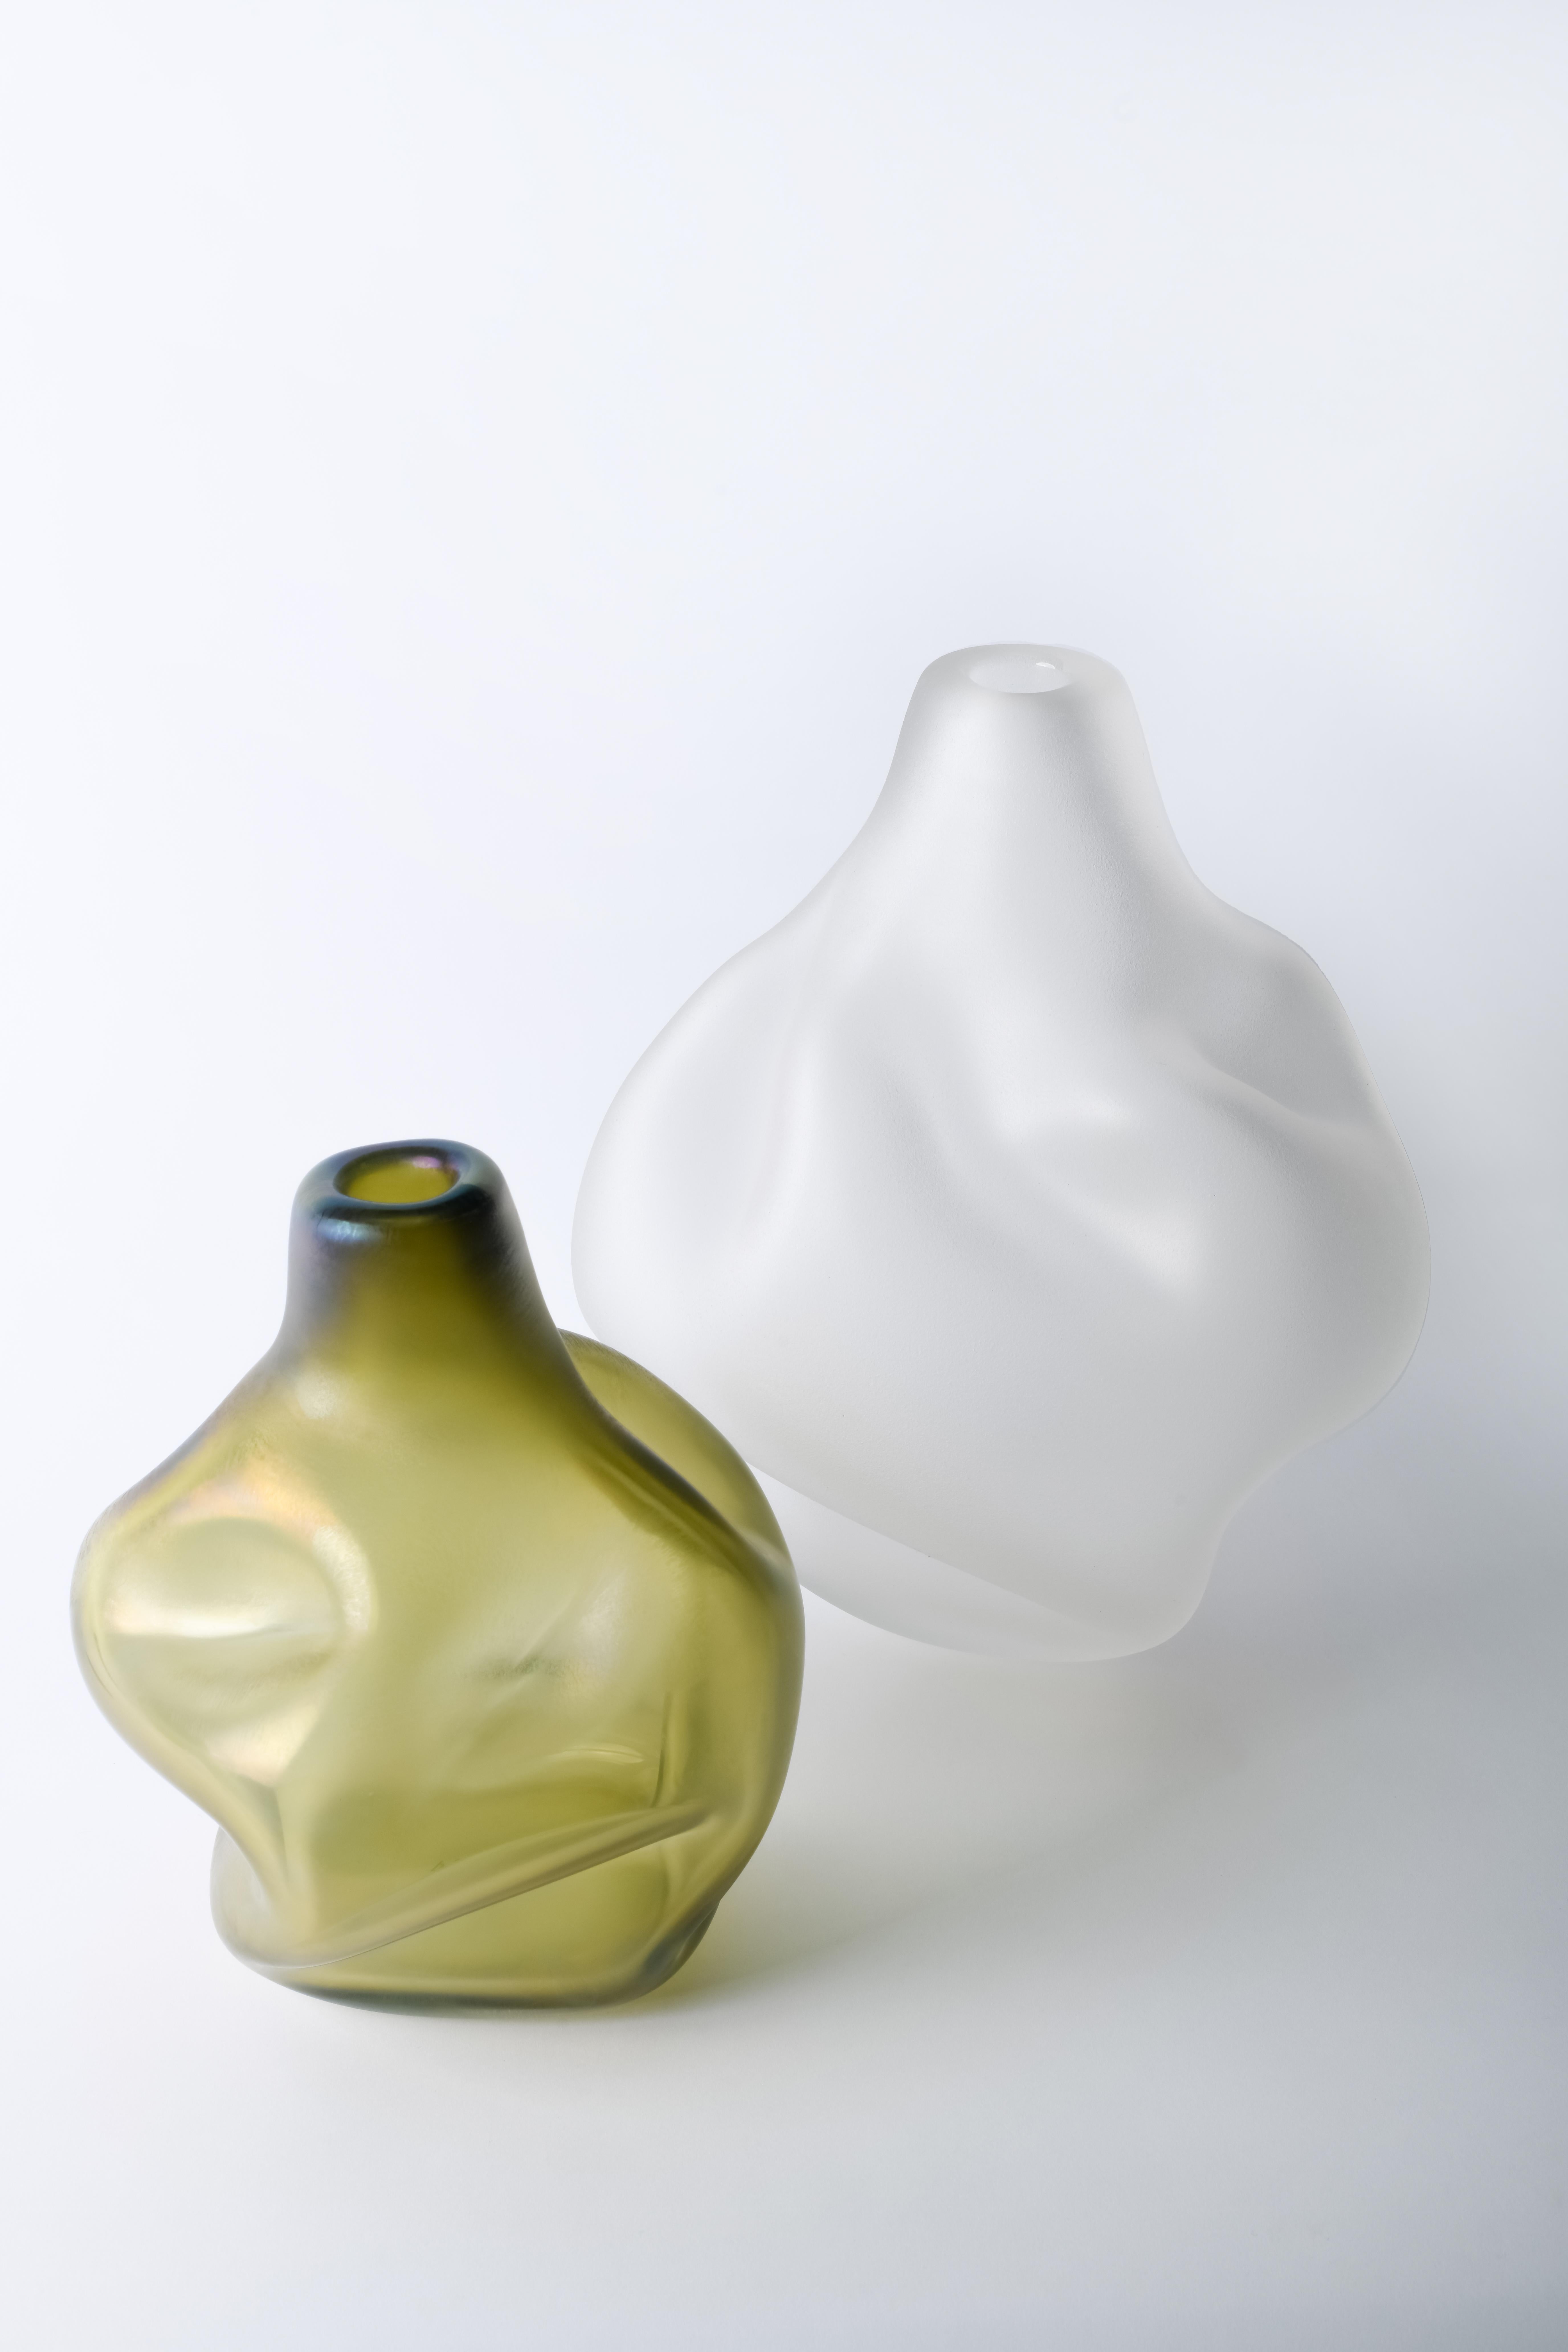 Italian 21st Century Ludovica+Roberto Palomba Laguna Caigo Small Vase Murano Moss Green For Sale